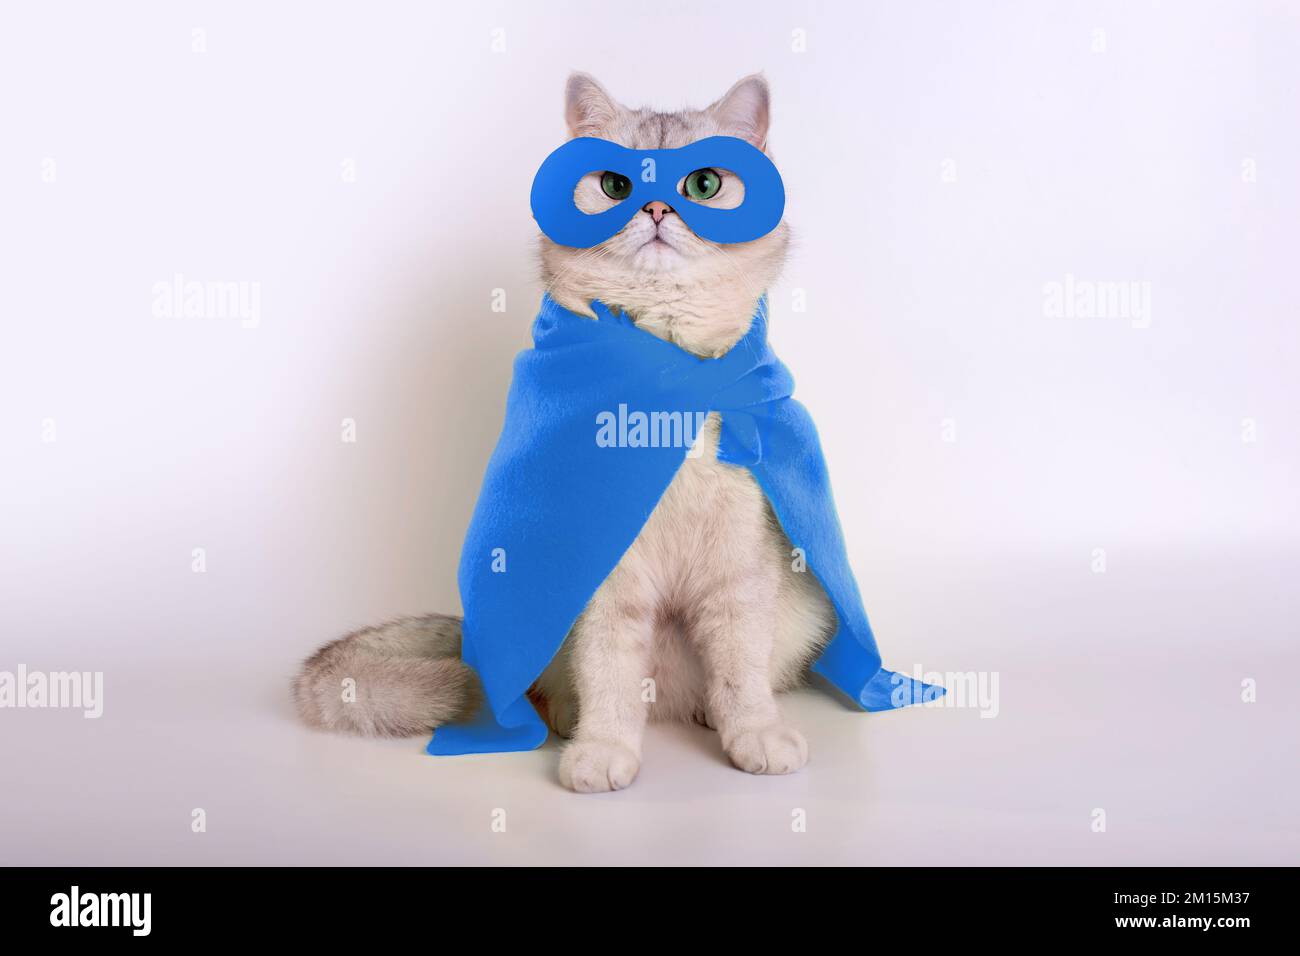 Funny white cat in a blue superhero costume Stock Photo